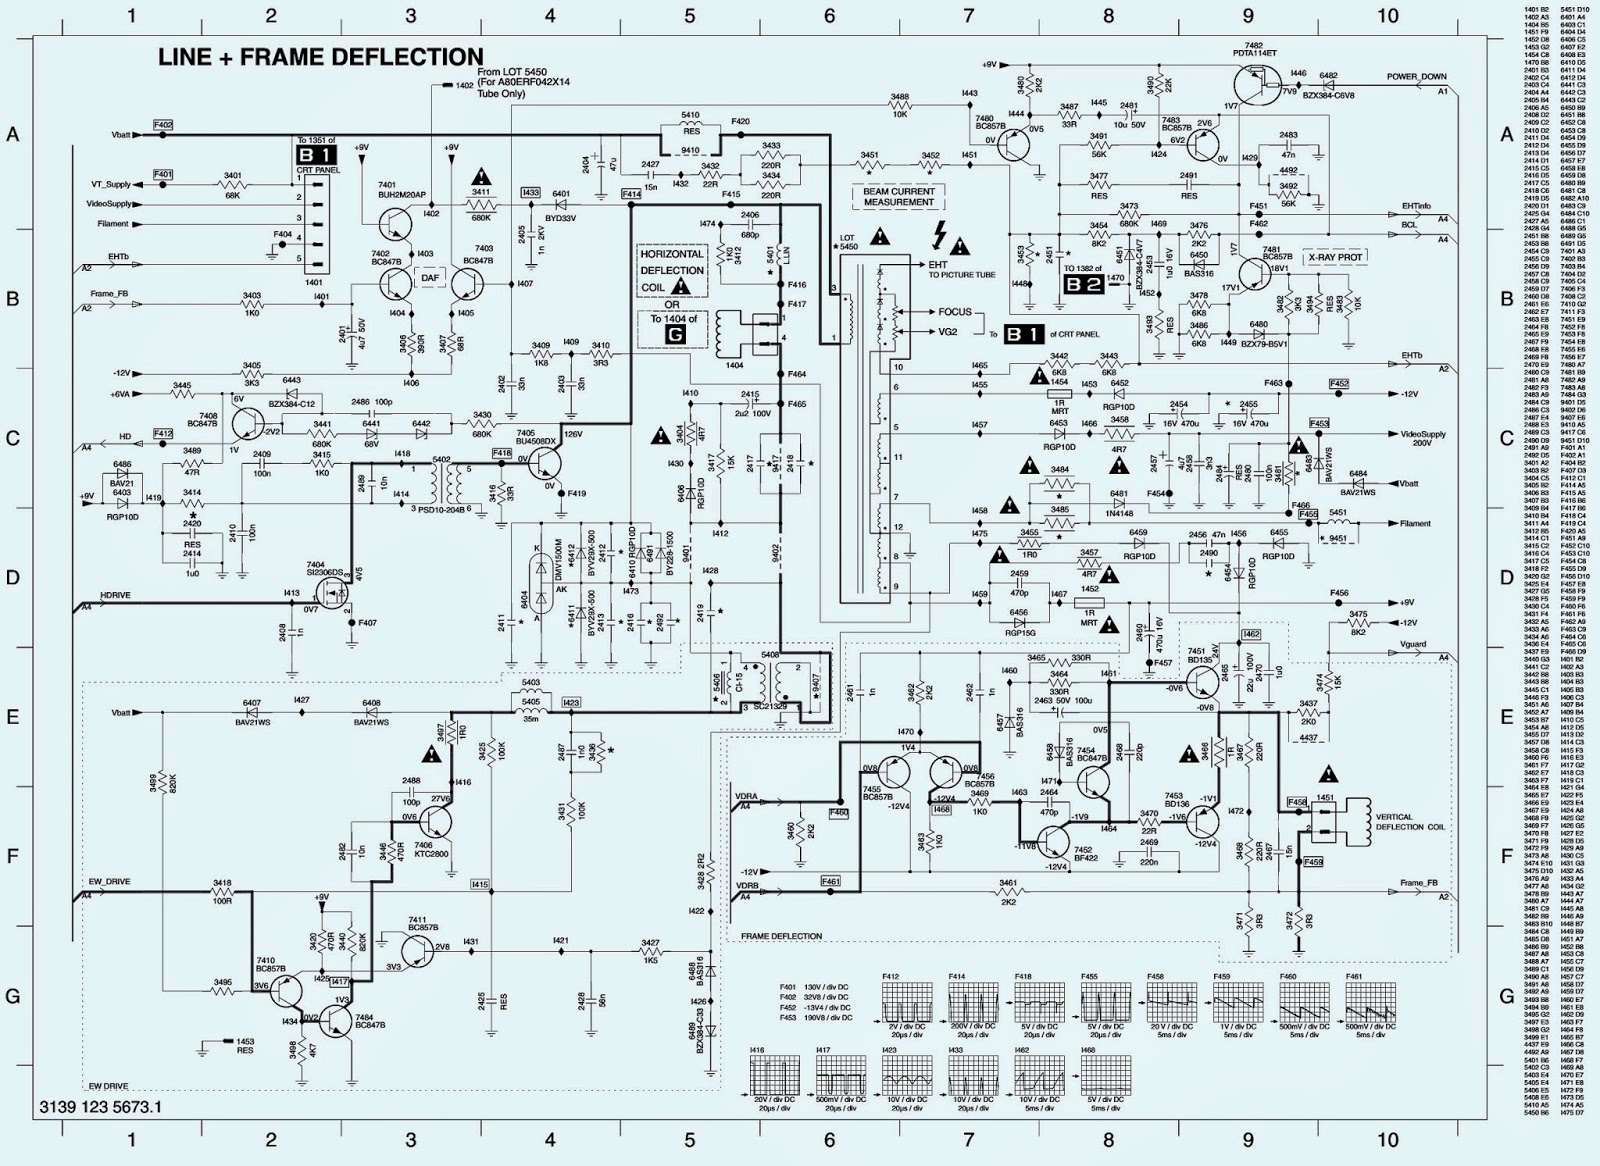 PHILIPS TV - L04A circuit Diagram